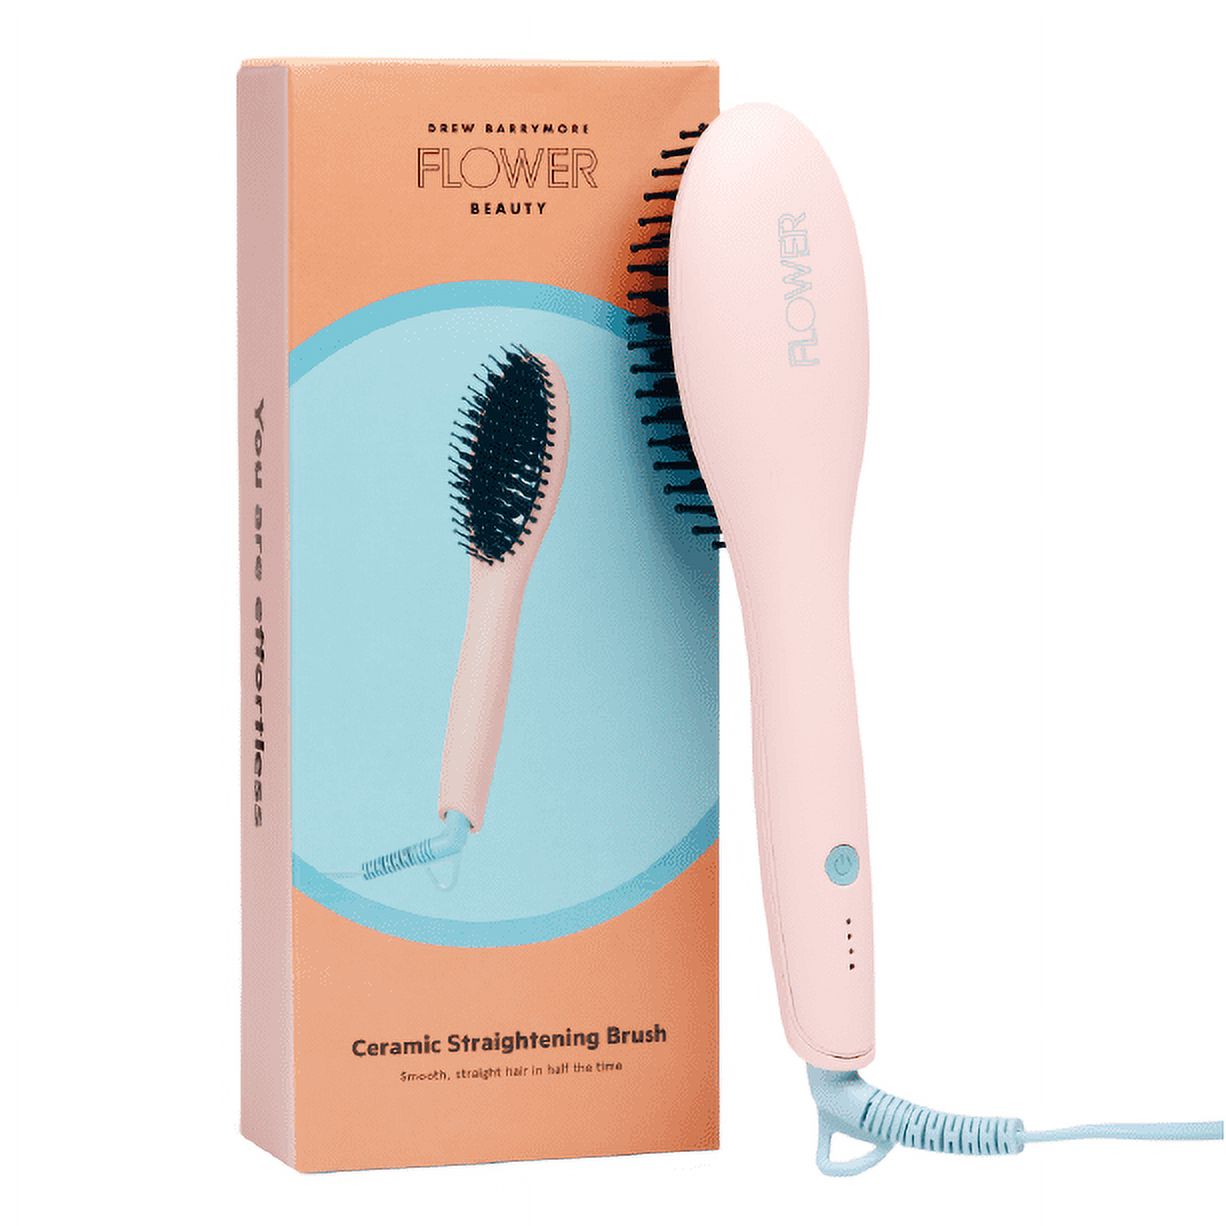 FLOWER Ceramic Hair Straightening Brush, Pink - image 3 of 11